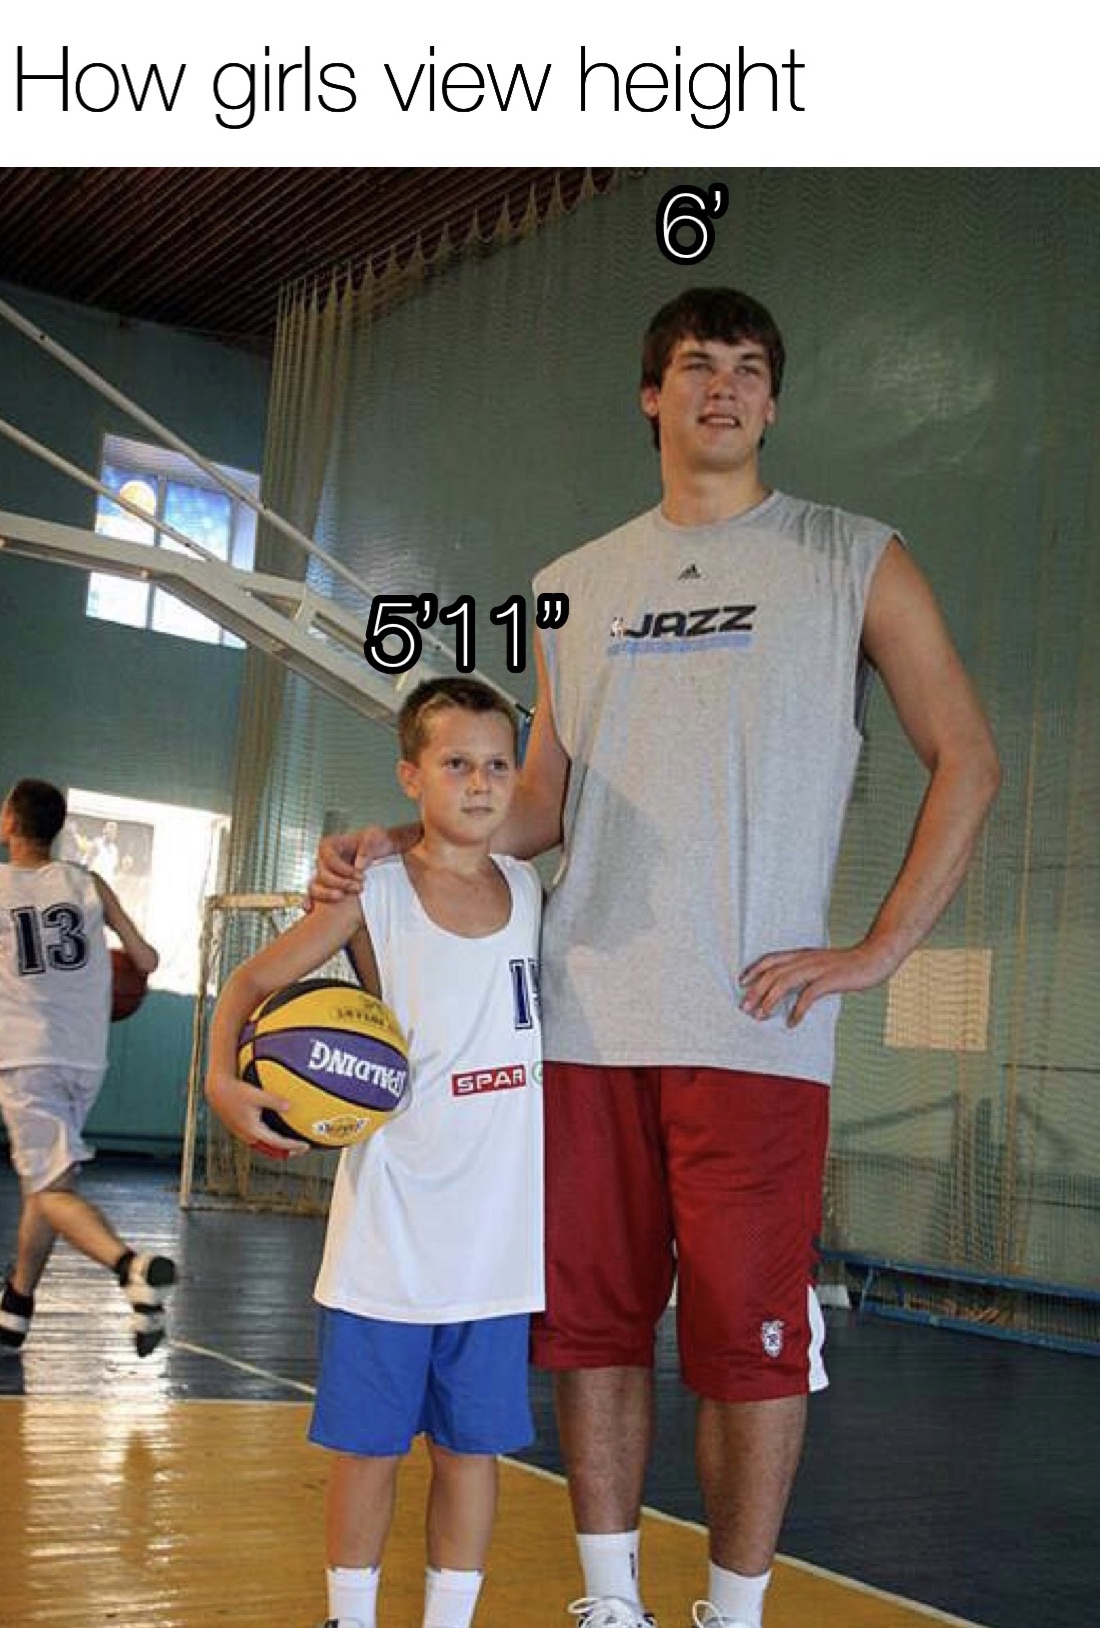 7 1 basketball player - How girls view height 5'11JAZZ Dado Spar